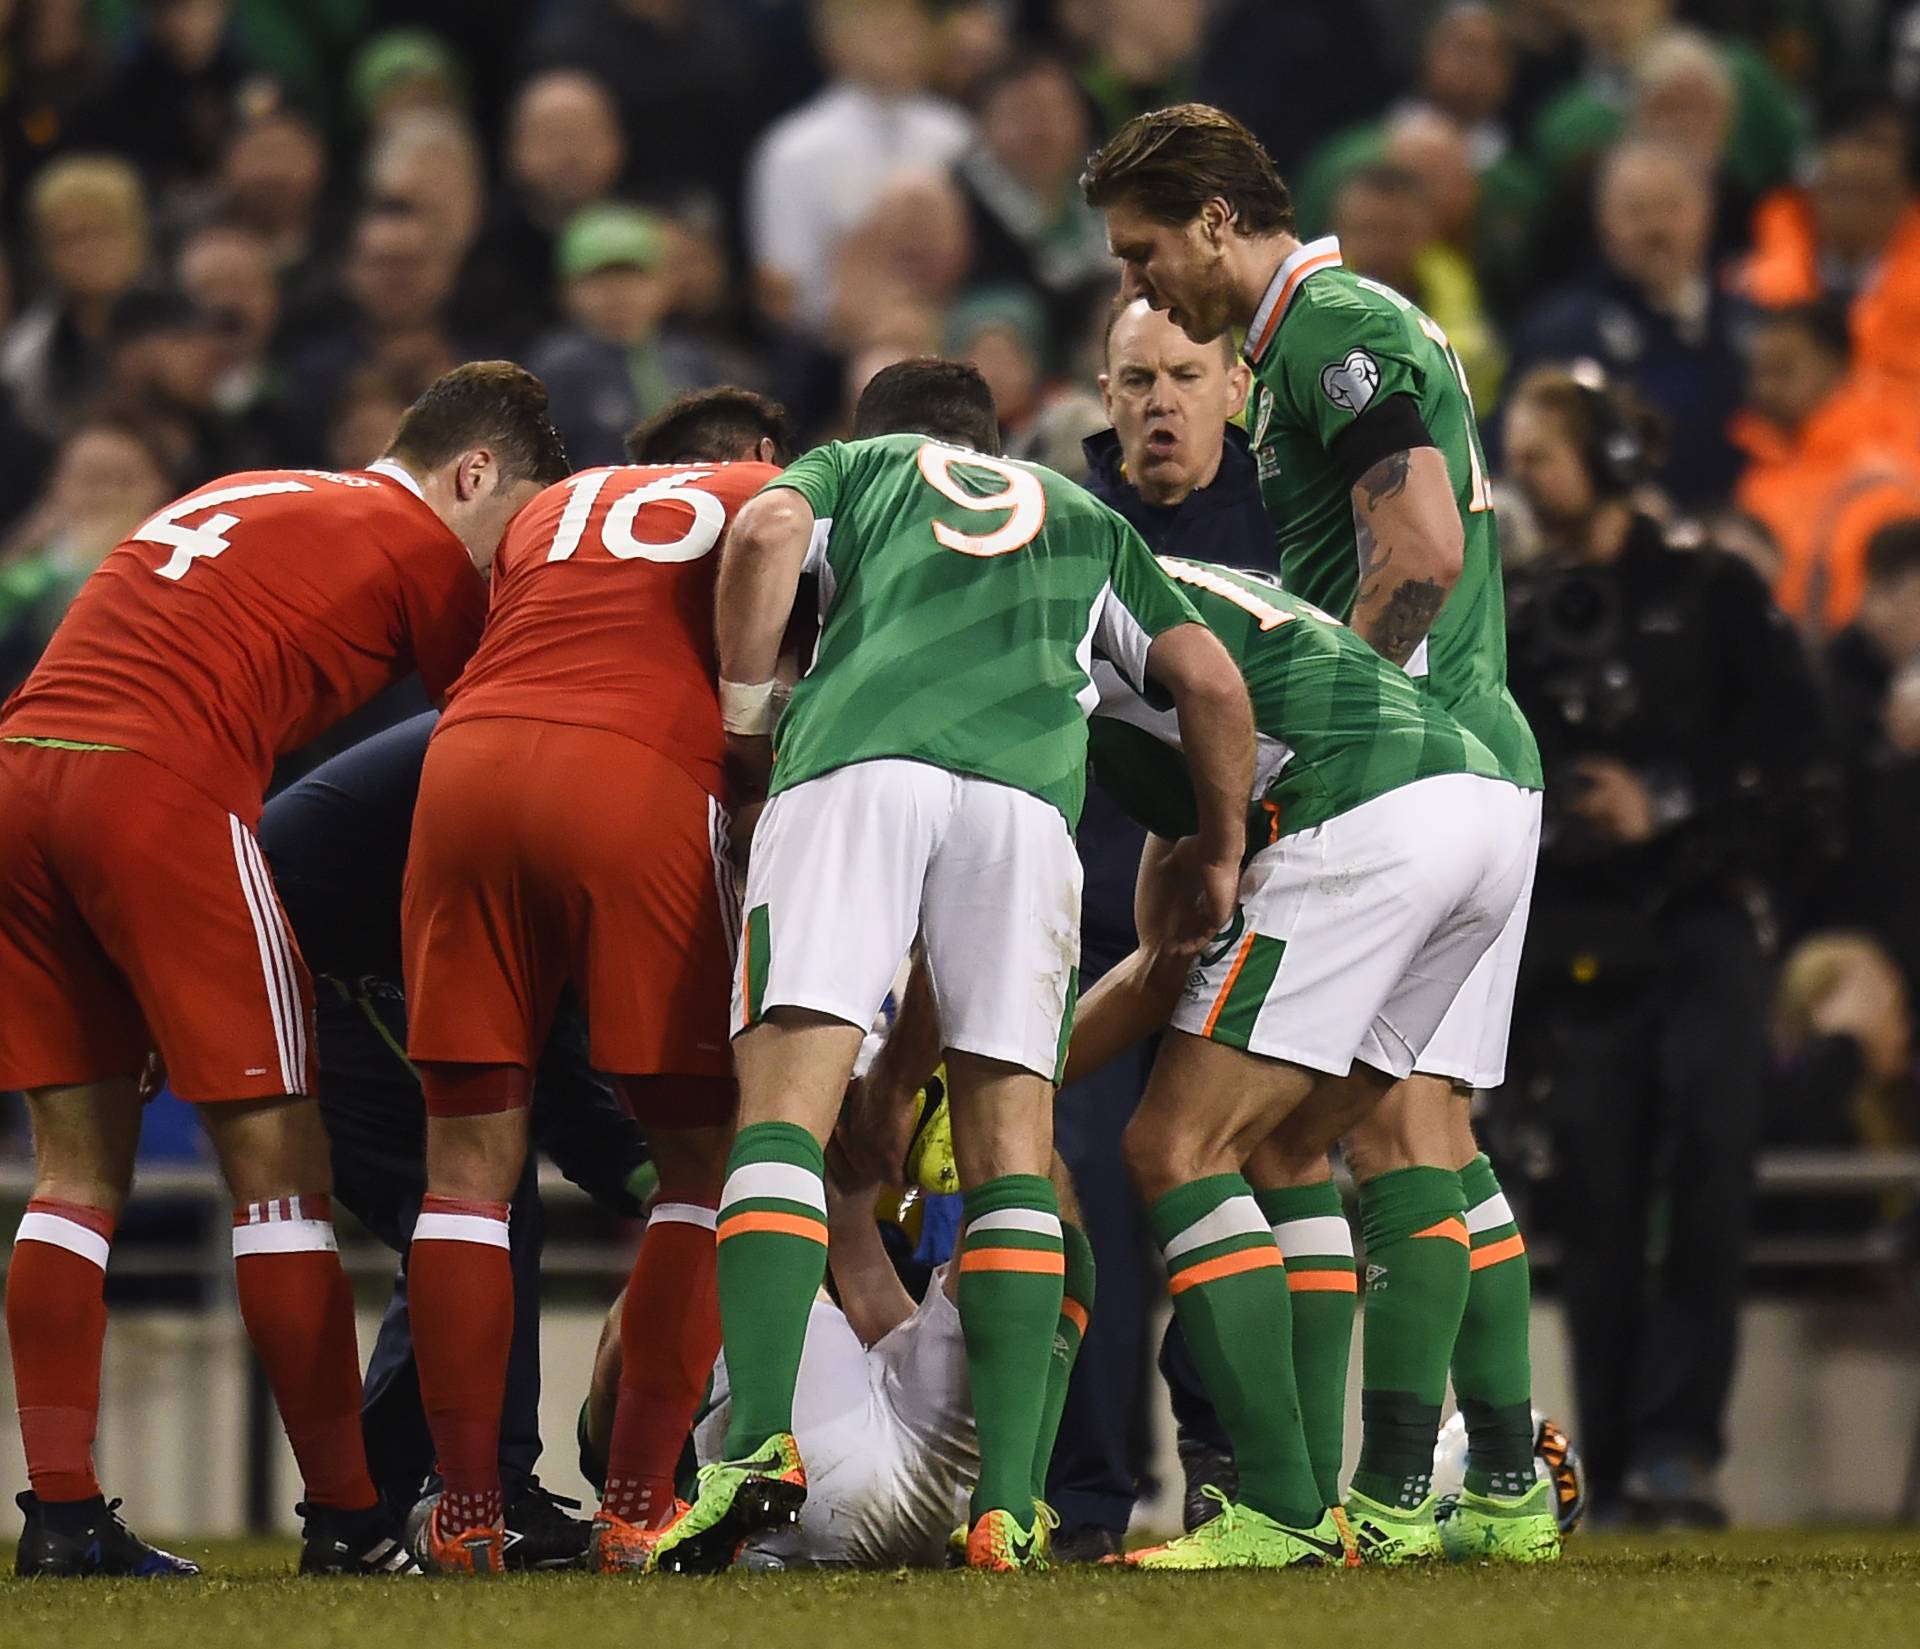 Players surround Republic of Ireland's Seamus Coleman as he lies injured